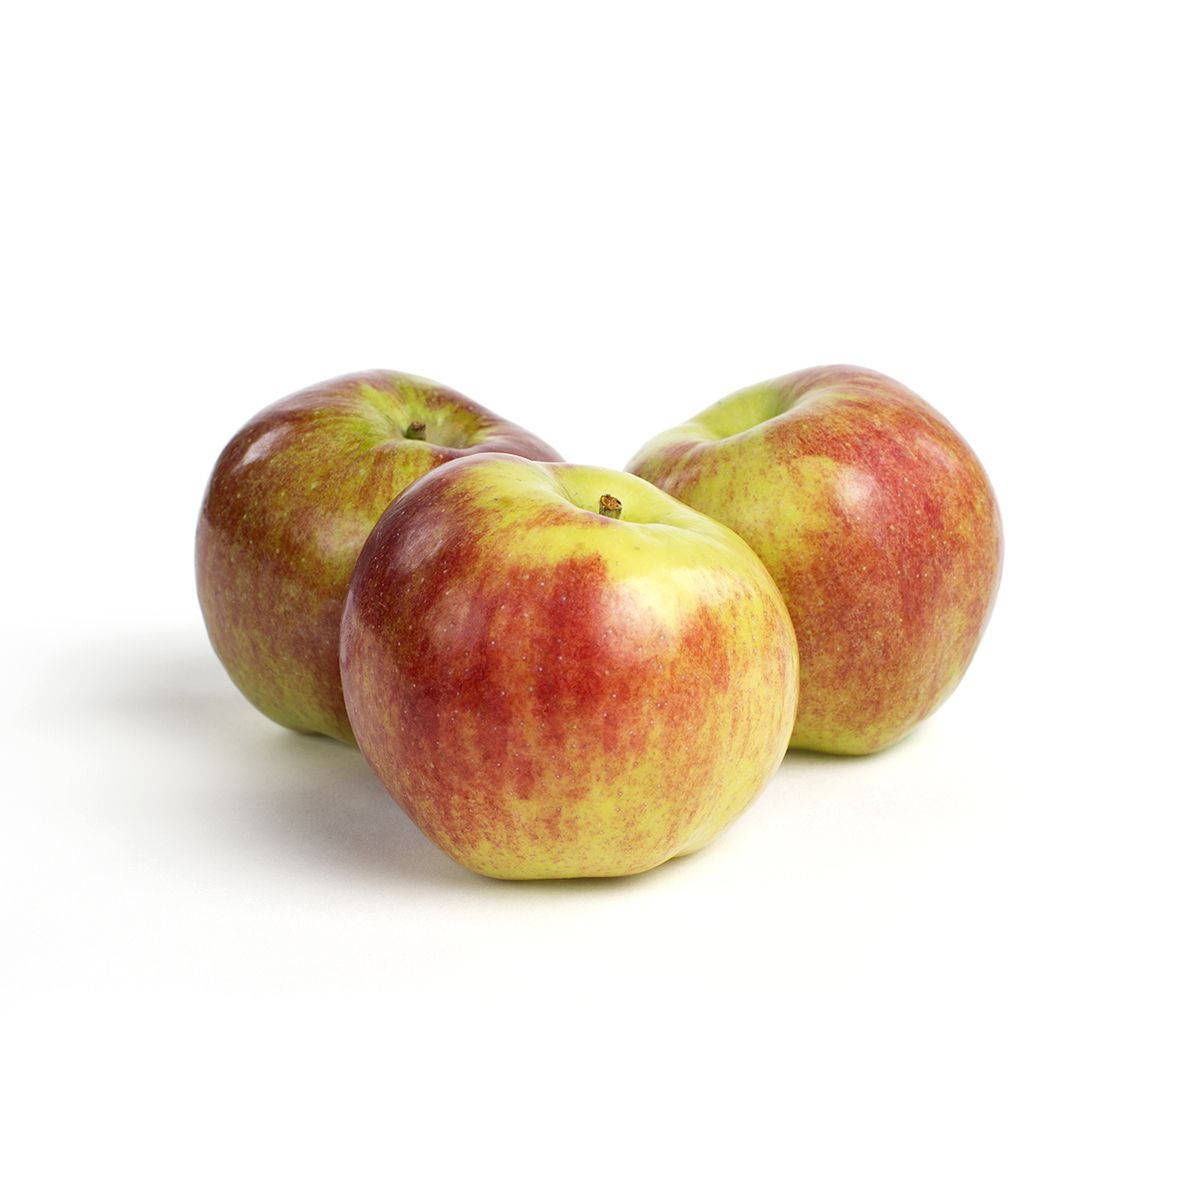 Hudson River Fruit Macoun Apples